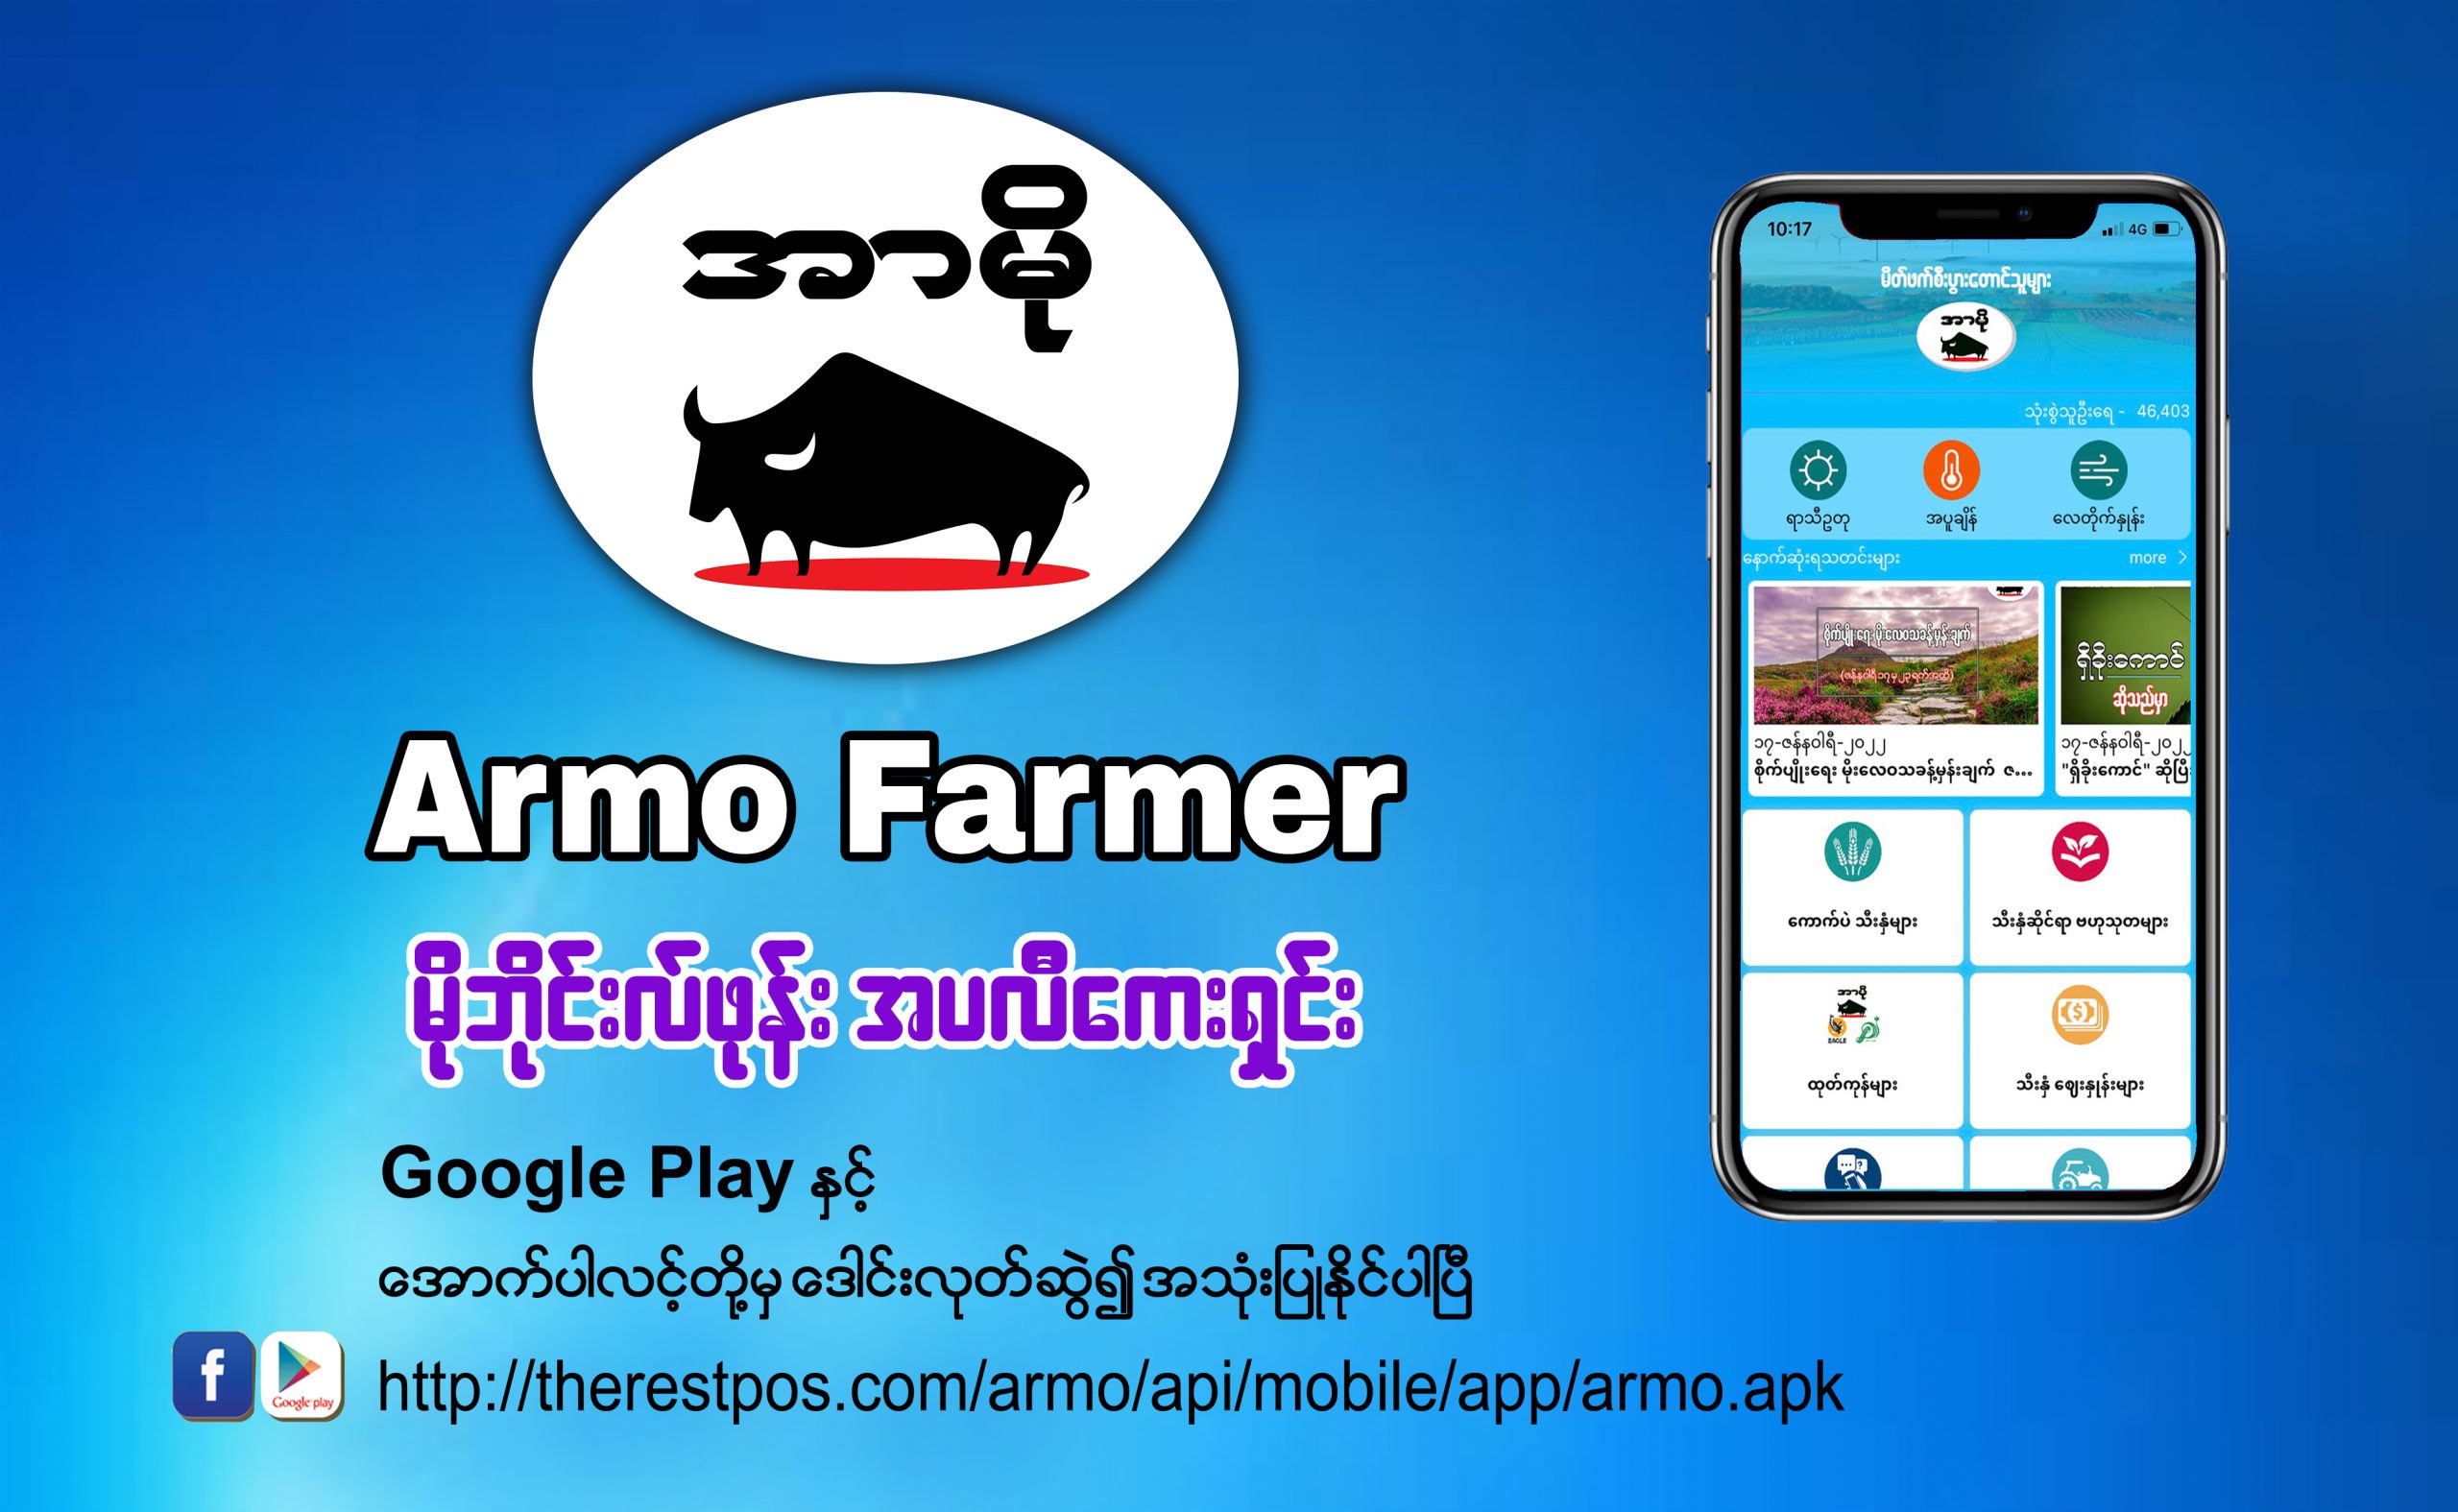 Armo farmer mobile application